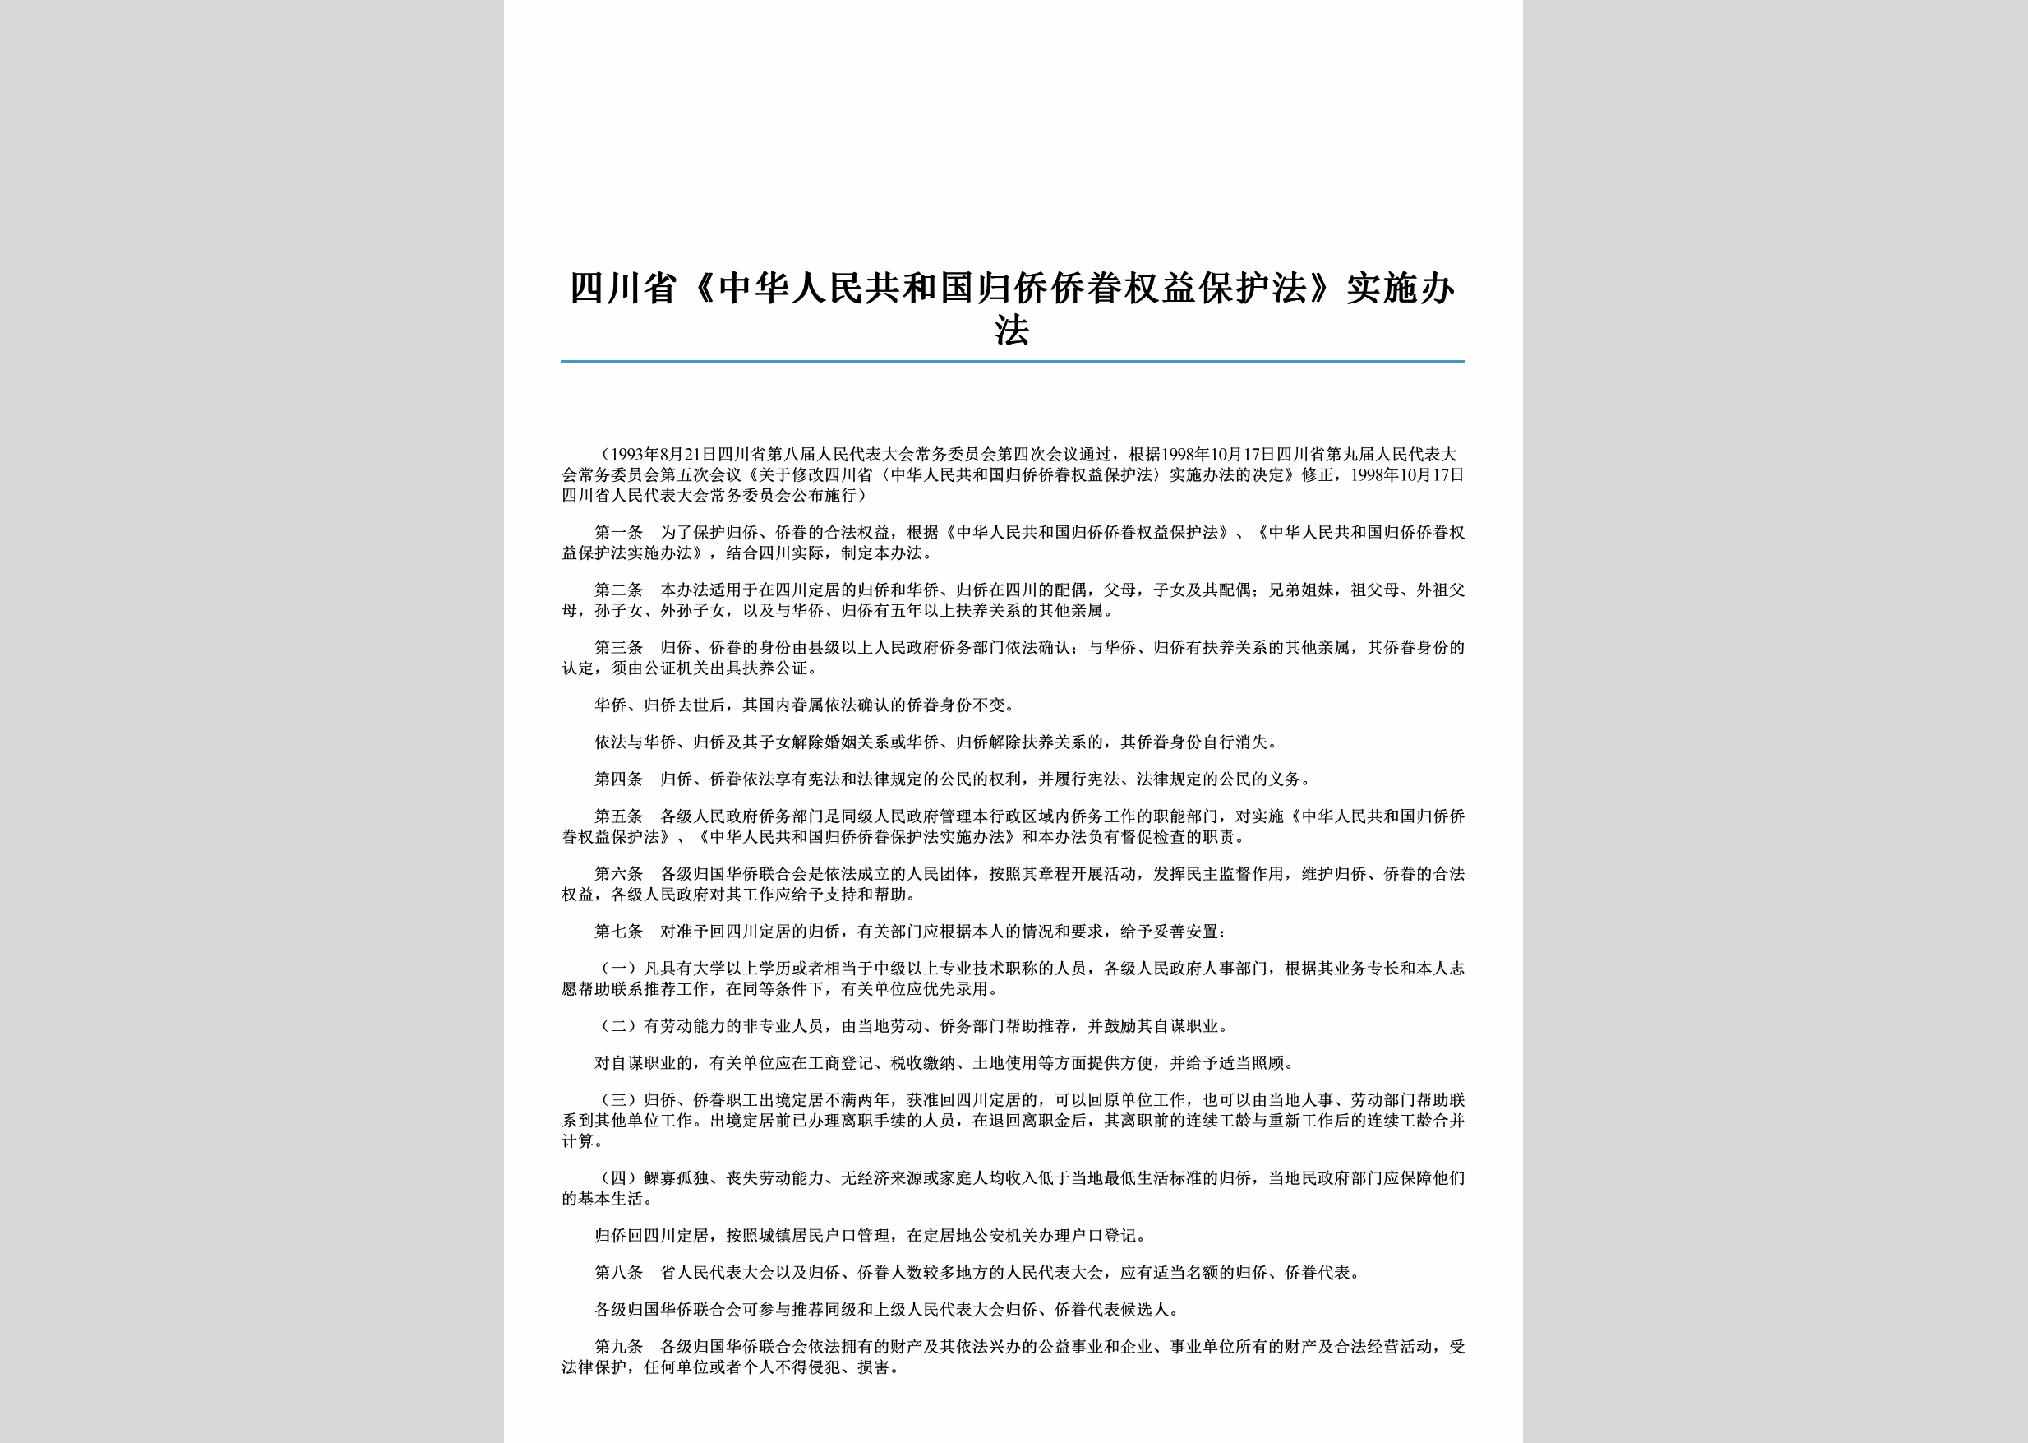 SC-QJBHSSBF-1998：四川省《中华人民共和国归侨侨眷权益保护法》实施办法